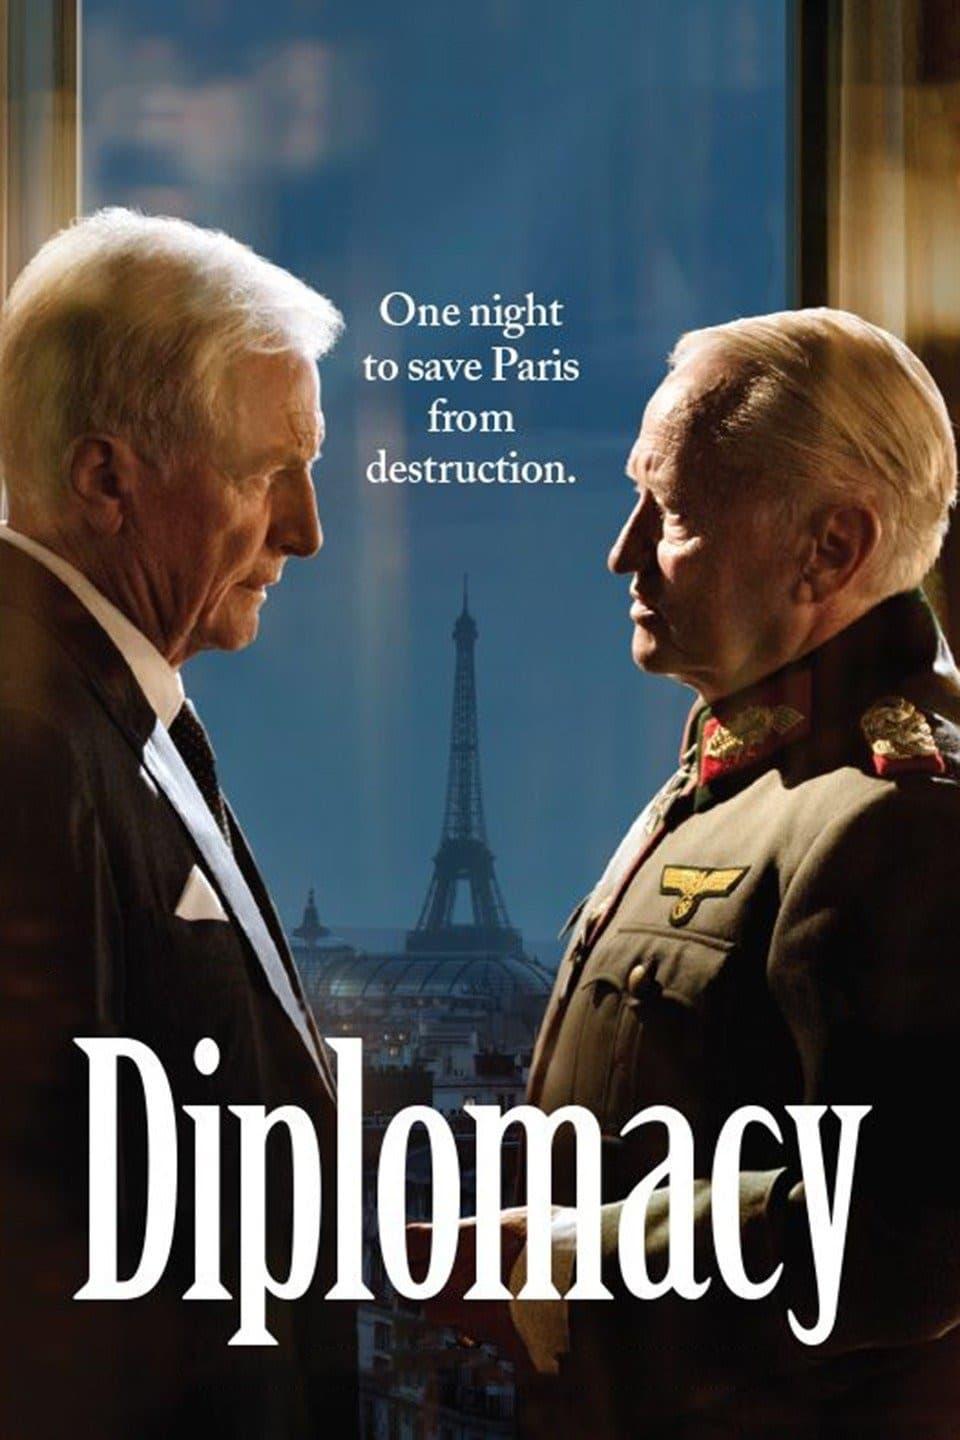 Diplomacy poster